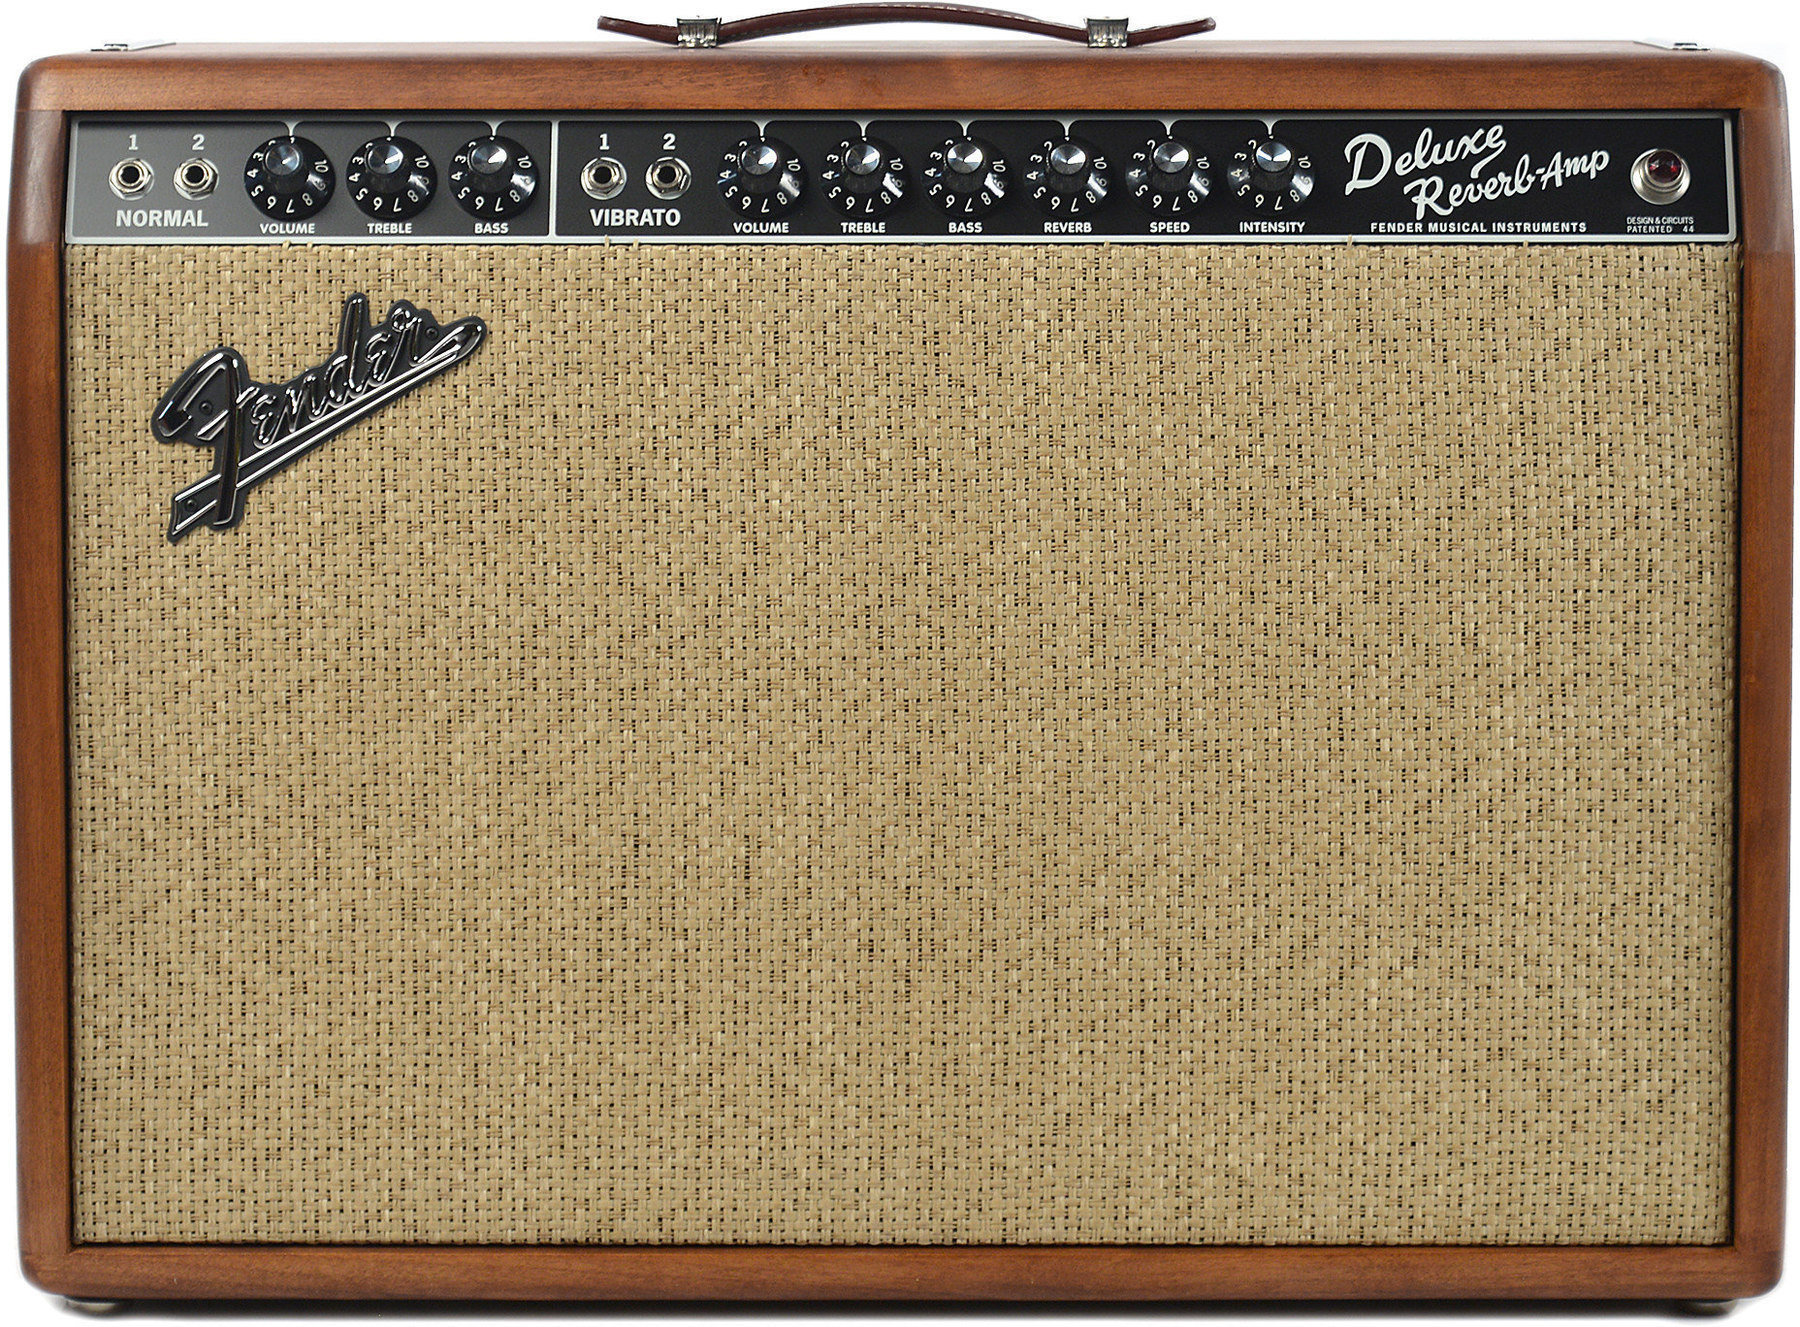 Vollröhre Gitarrencombo Fender 65 Deluxe Reverb Knotty Pine